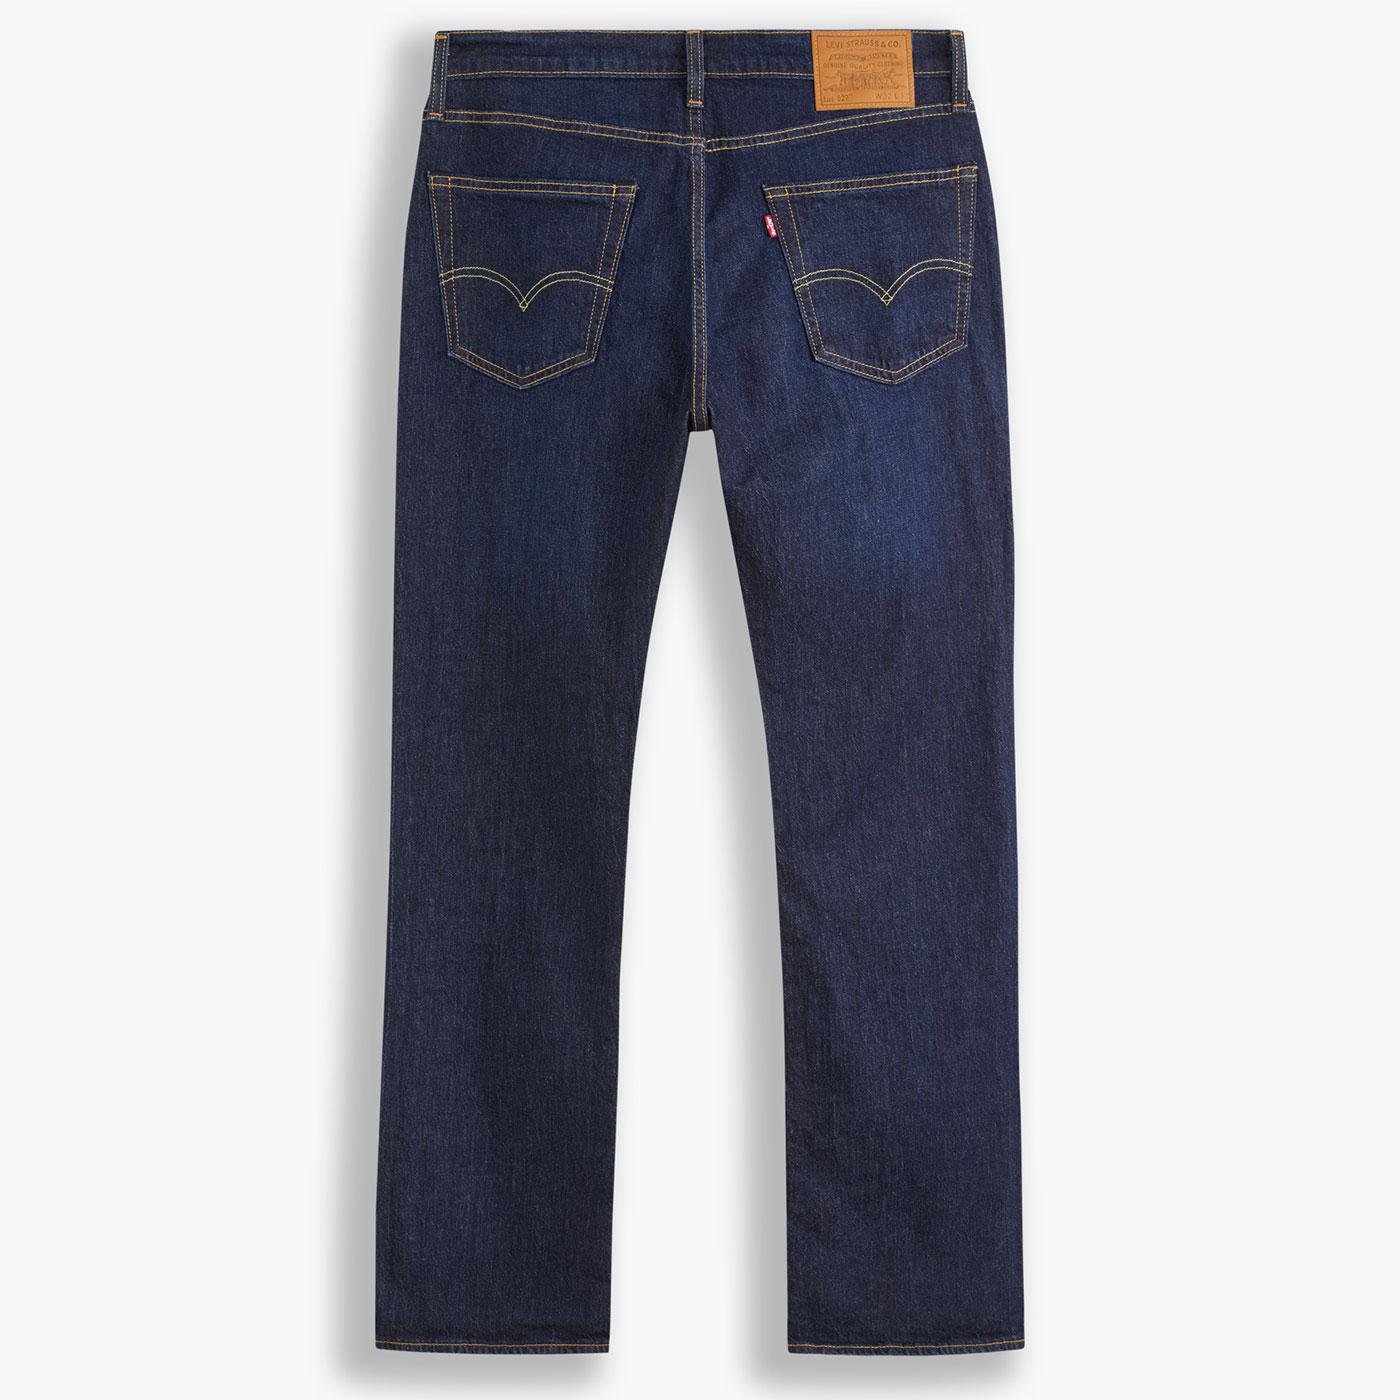 LEVI'S 527 Men's Retro Slim Bootcut Jeans in Feelin Right